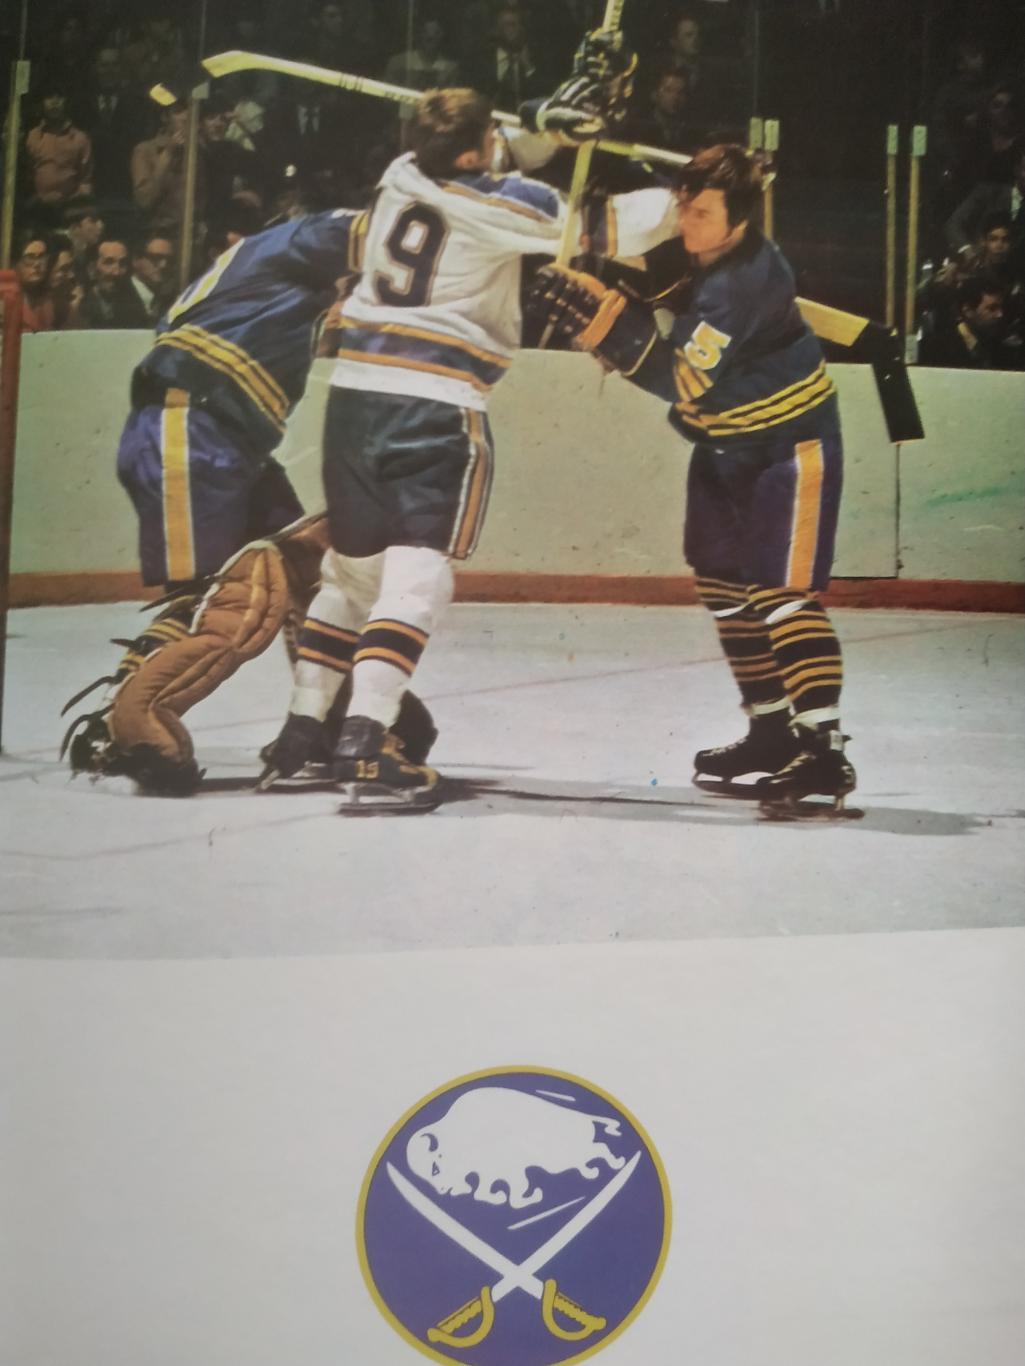 ХОККЕЙ ПРОГРАММА АЛЬБОМ БАФФАЛО НХЛ NHL 1971 OCT.16 BUFFALO PROGRAM 3